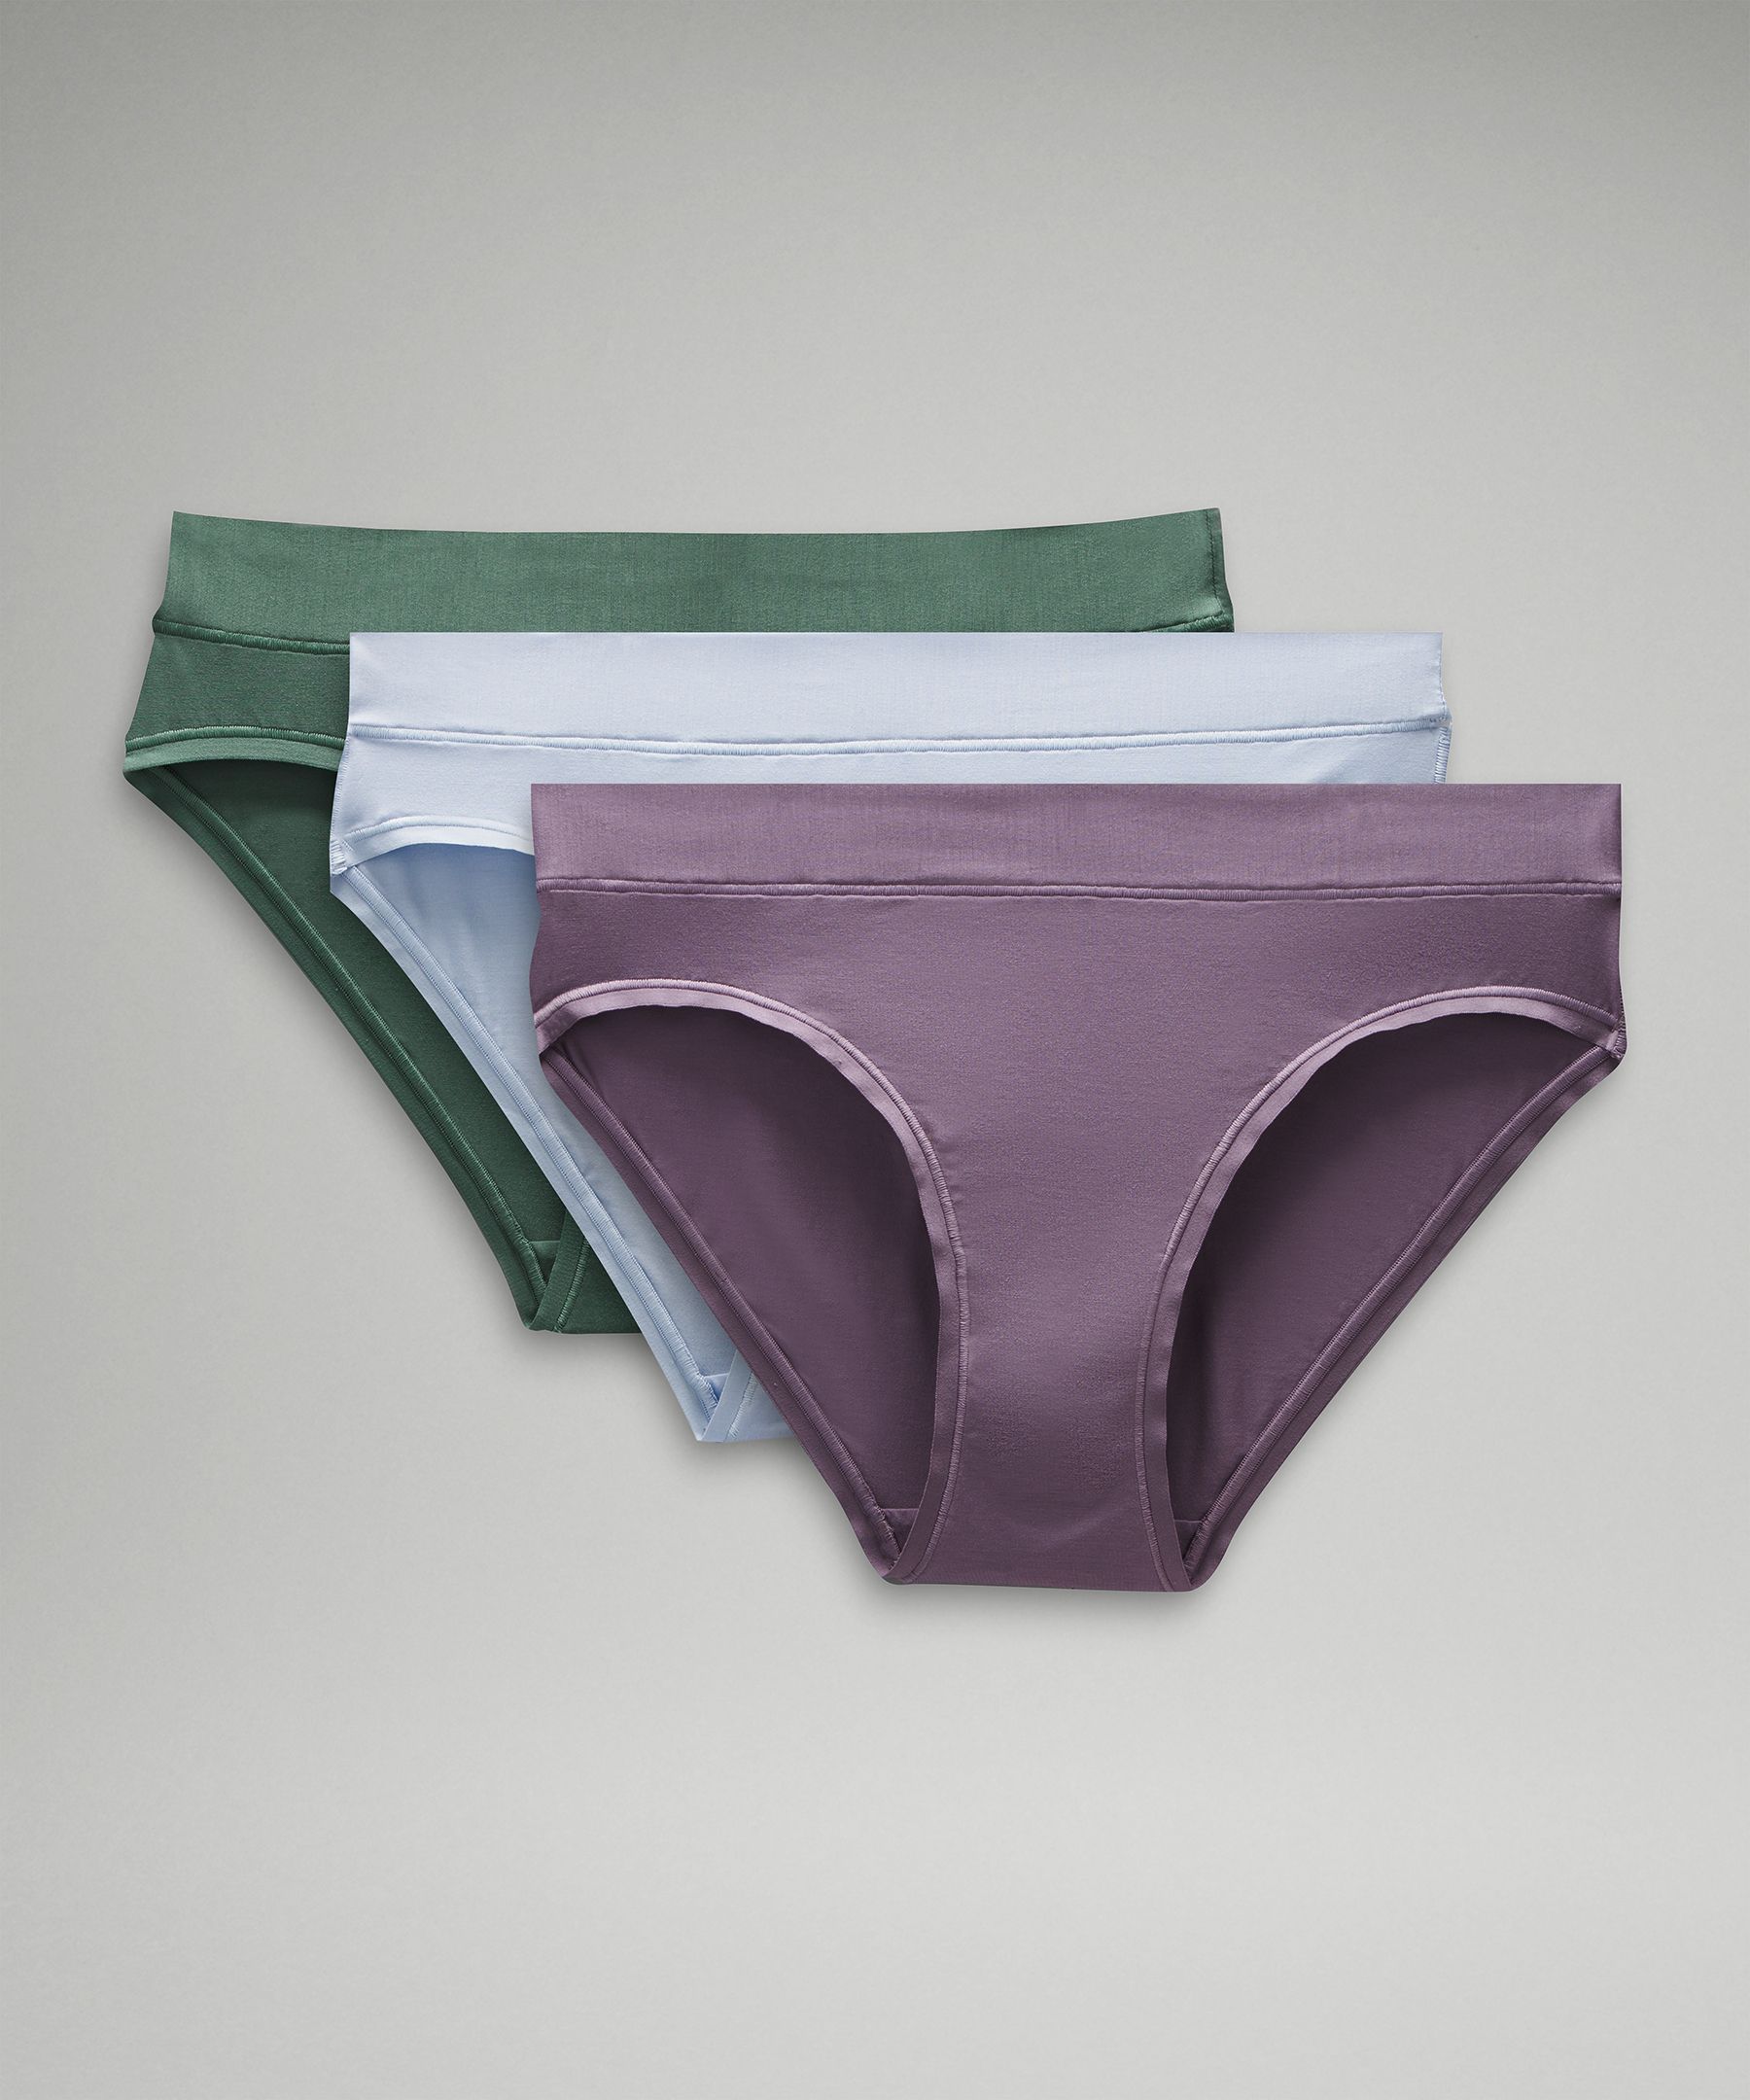 Lululemon Underease Mid-rise Cheeky Bikini Underwear 3 Pack In Double  Dimension Starlight Black/butter Pink/black